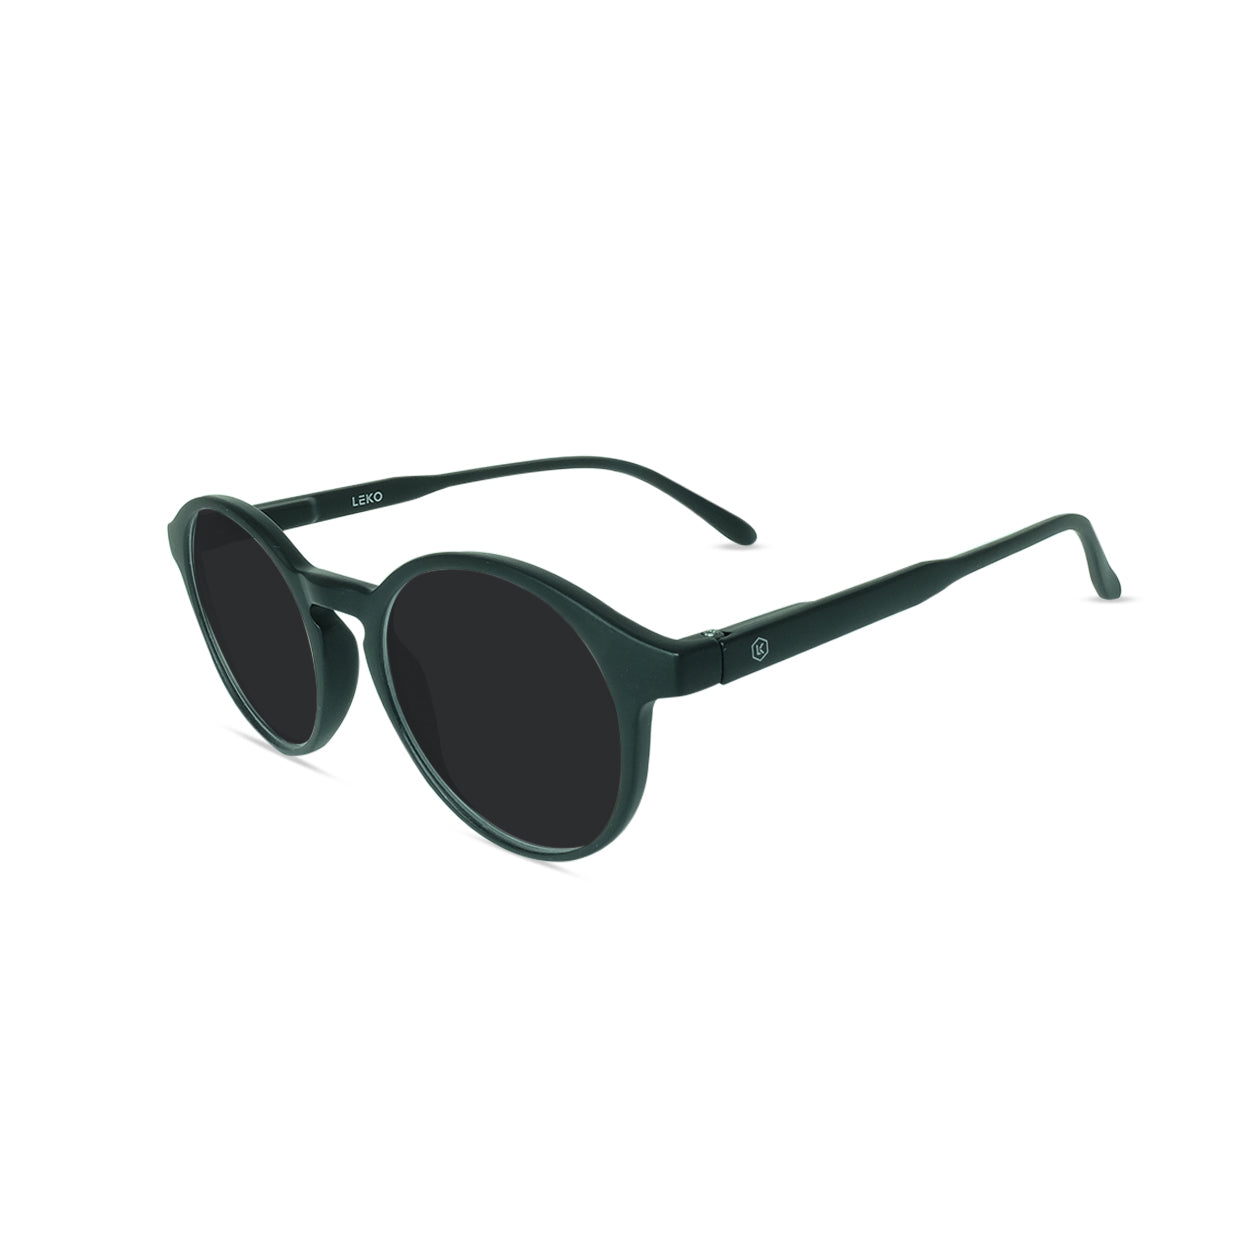 Affordable eco friendly glasses Black / Sun